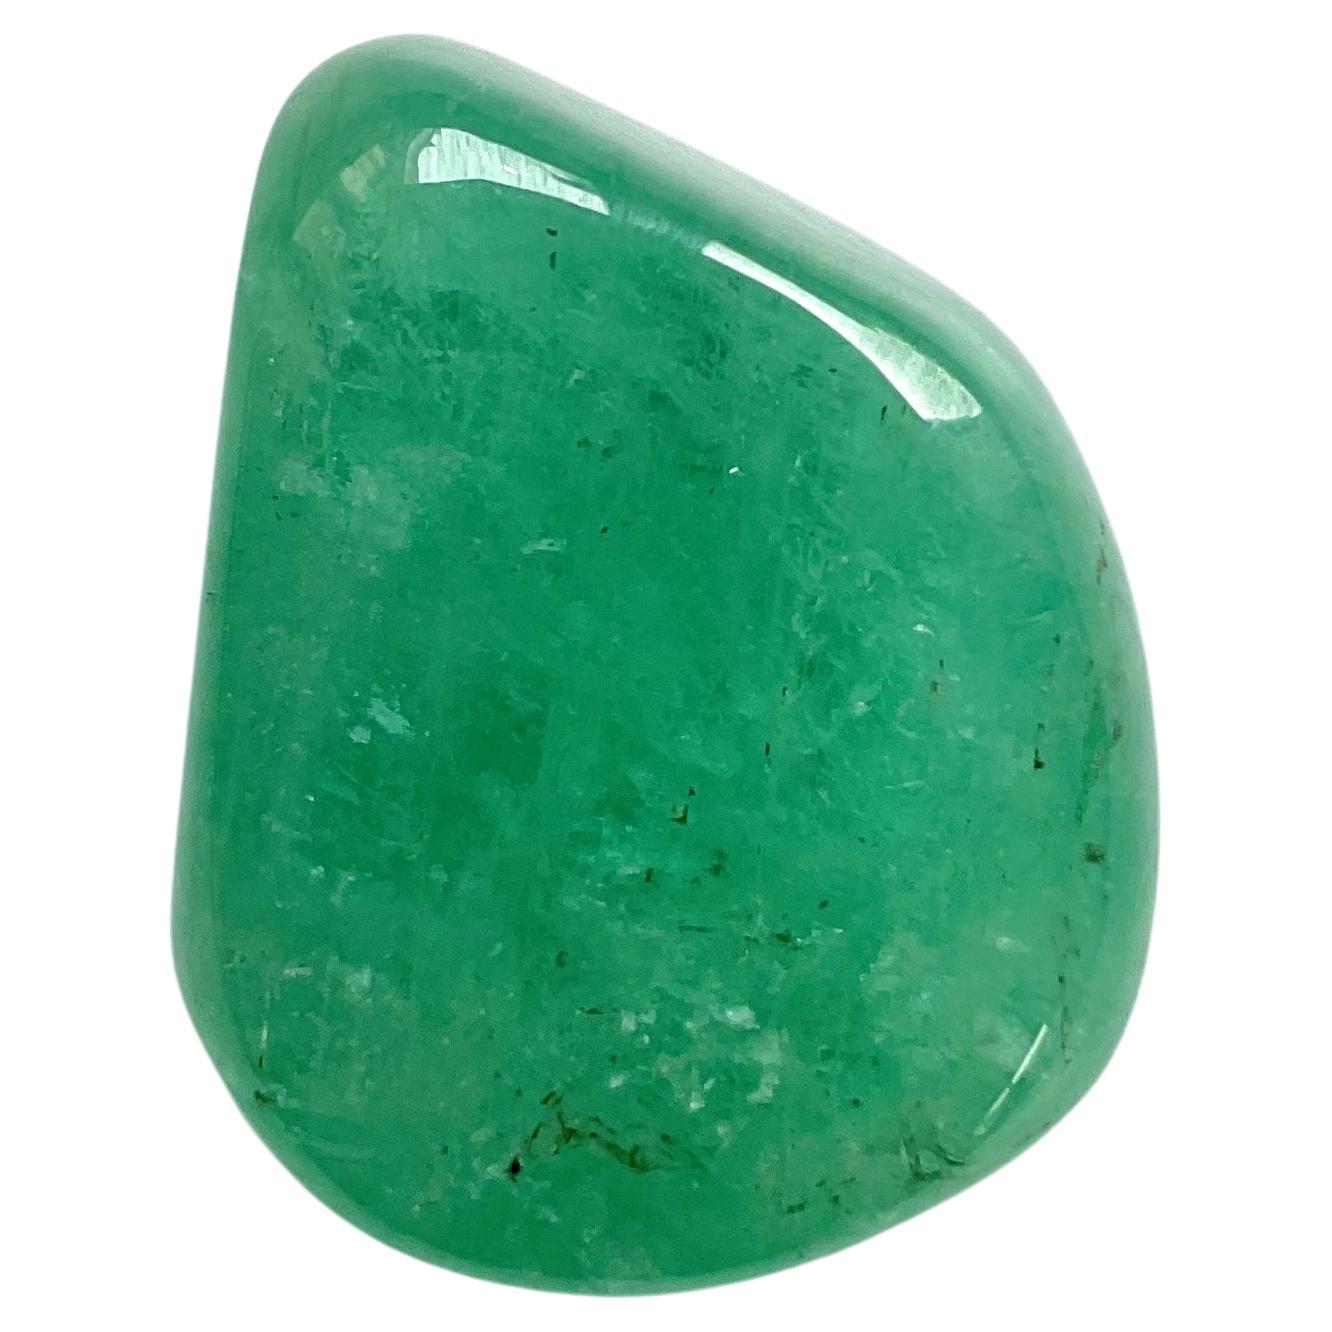 171.70 Carat Emerald Big Size Russian Tumbled Plain Natural Top Quality Gemstone